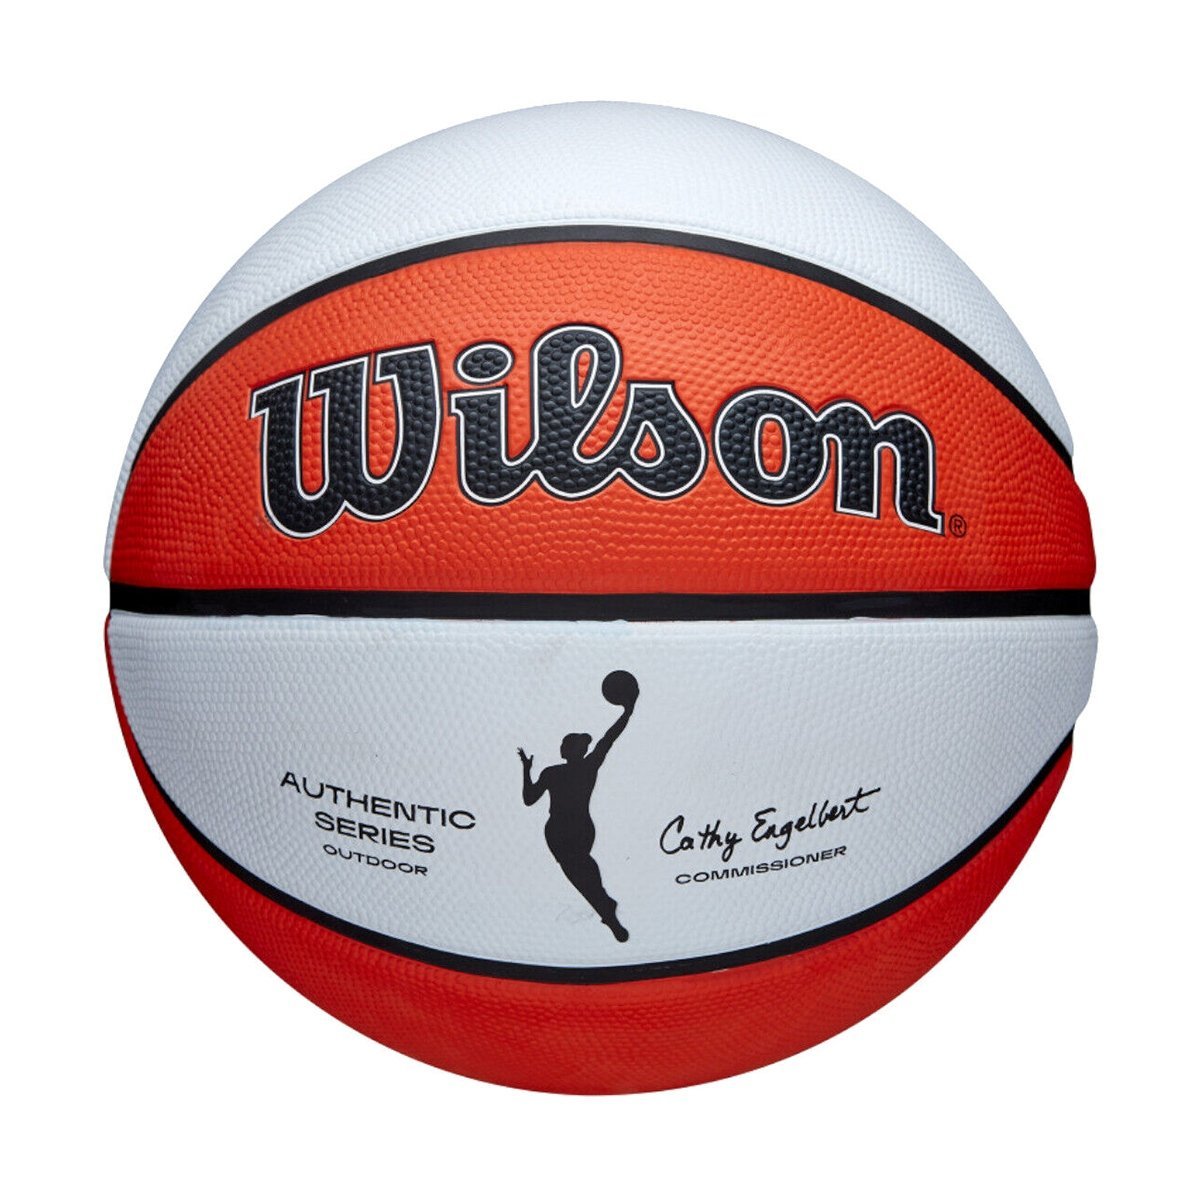 Lopta Wilson WNBA Authentic Series - biela/oranžová